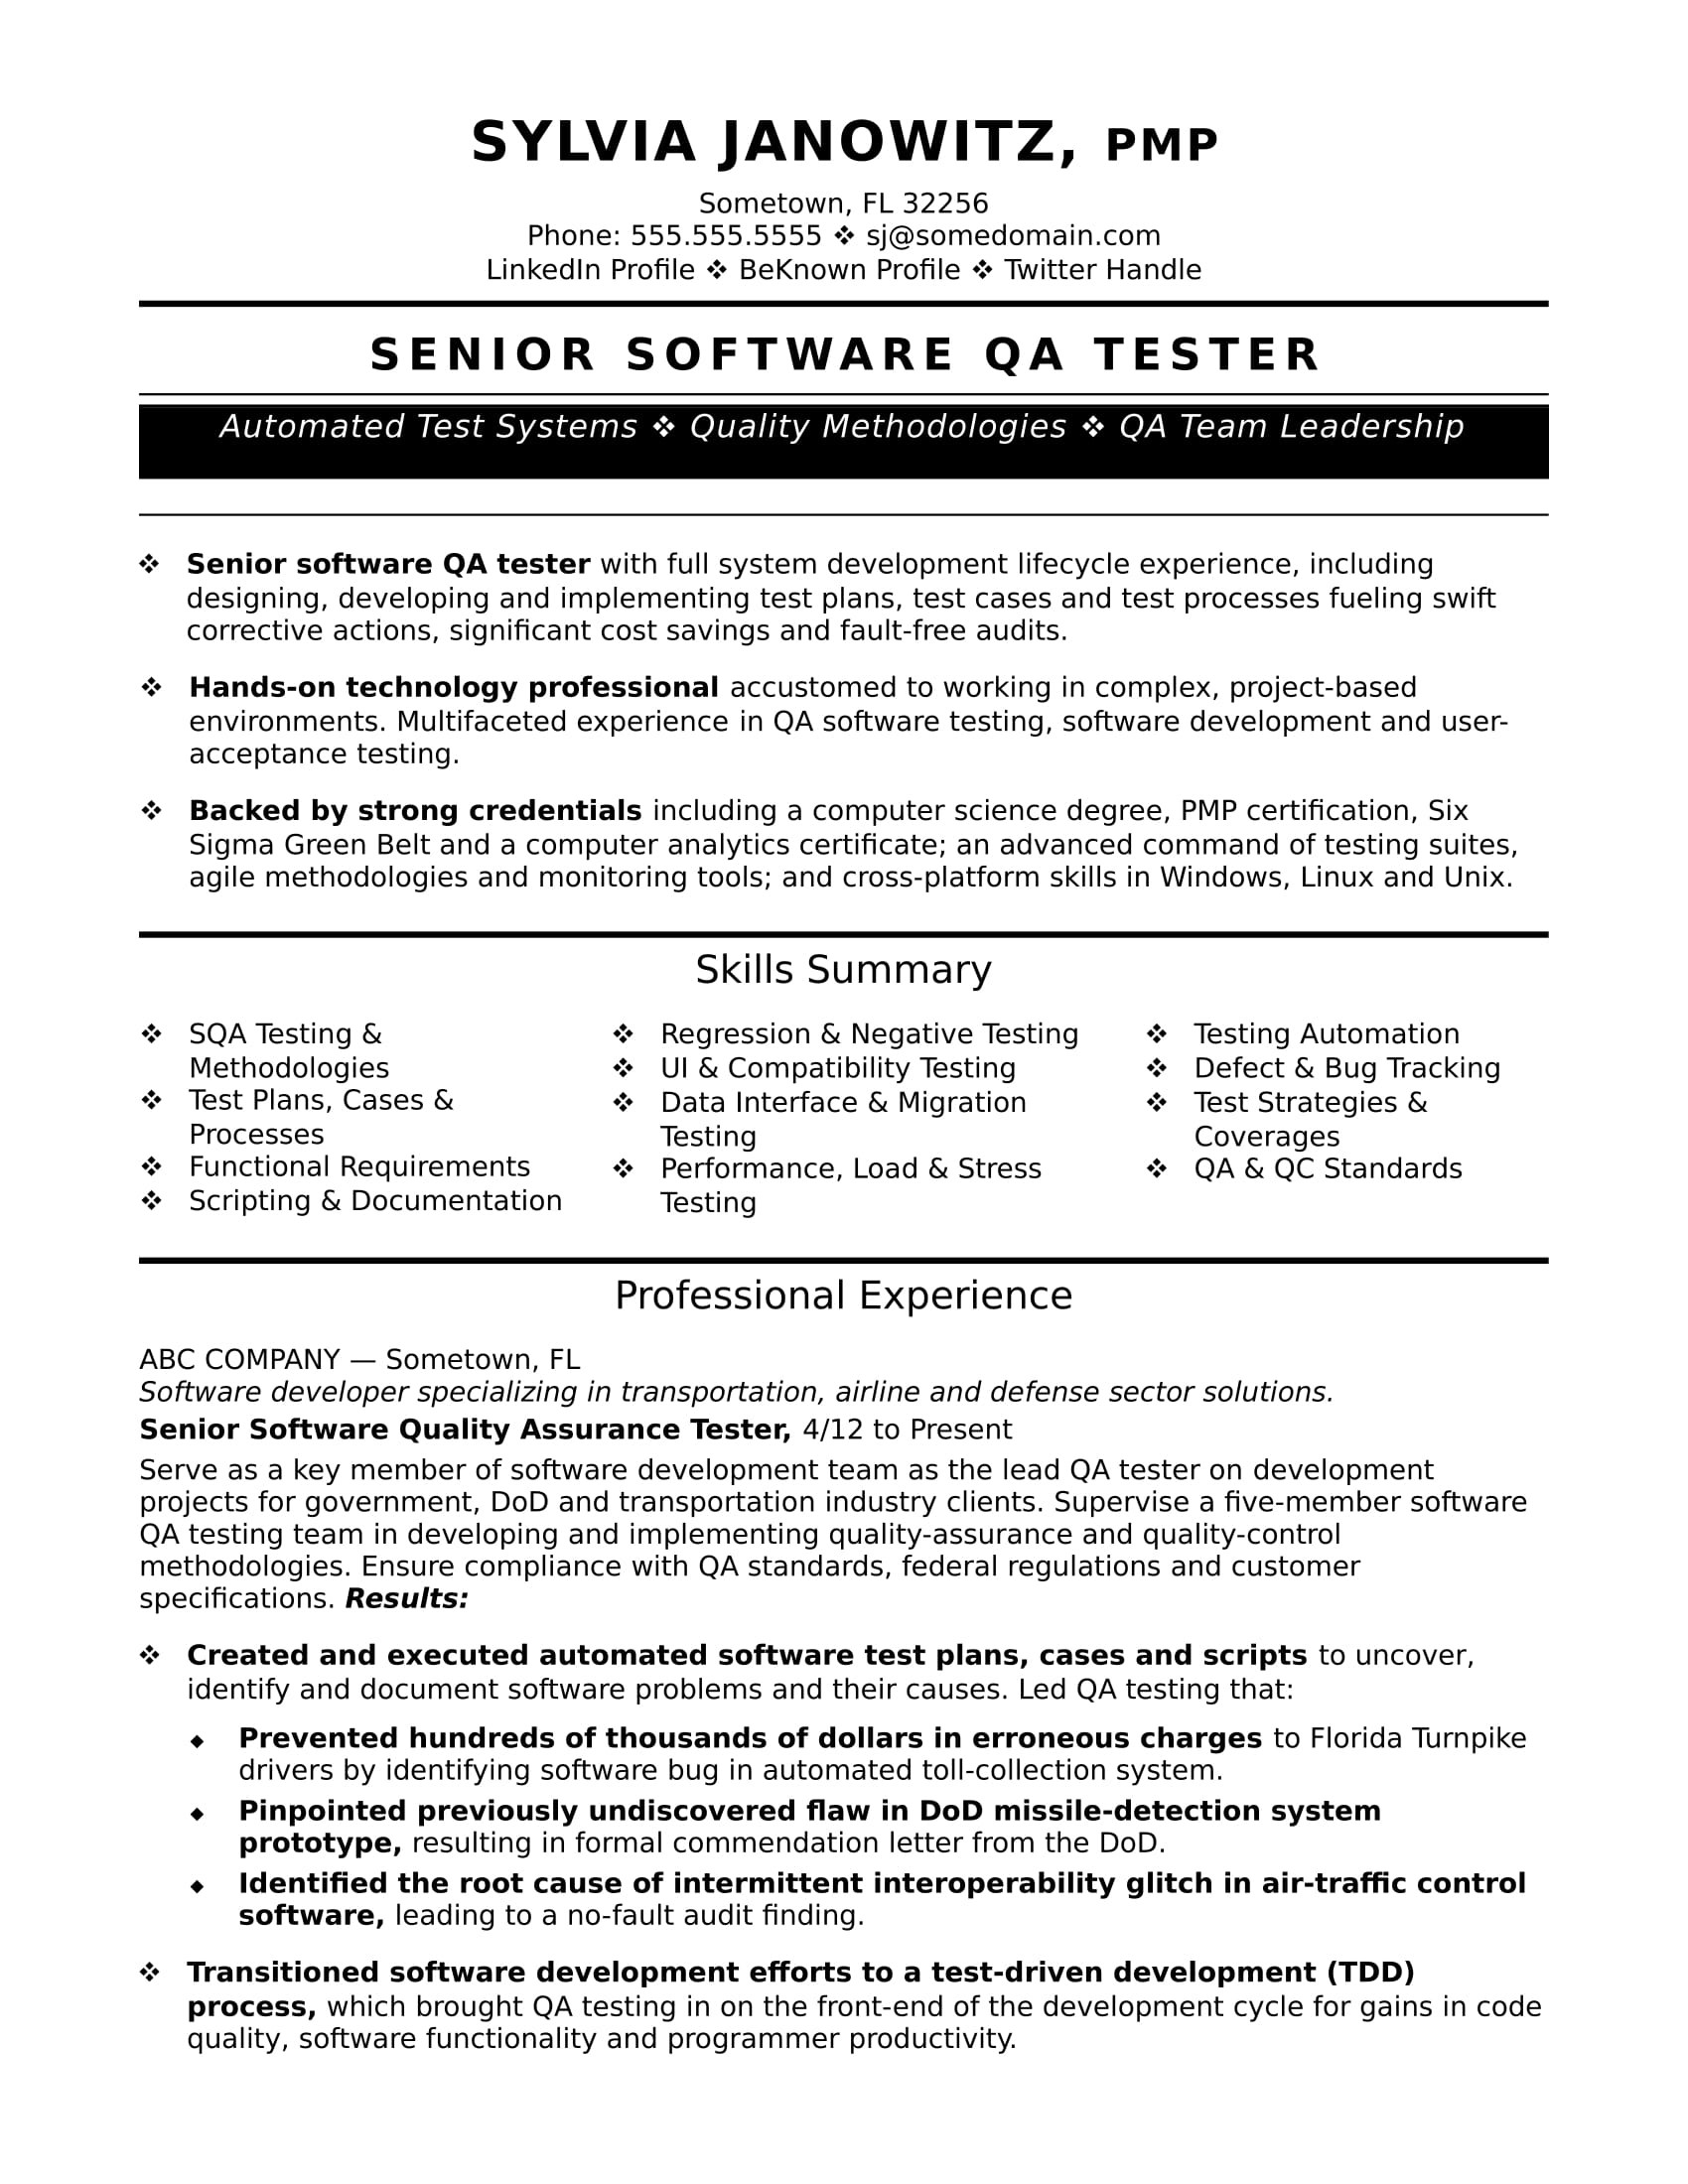 Software Testing Resume Samples for 4 Years Experience Experienced Qa software Tester Resume Sample Monster.com